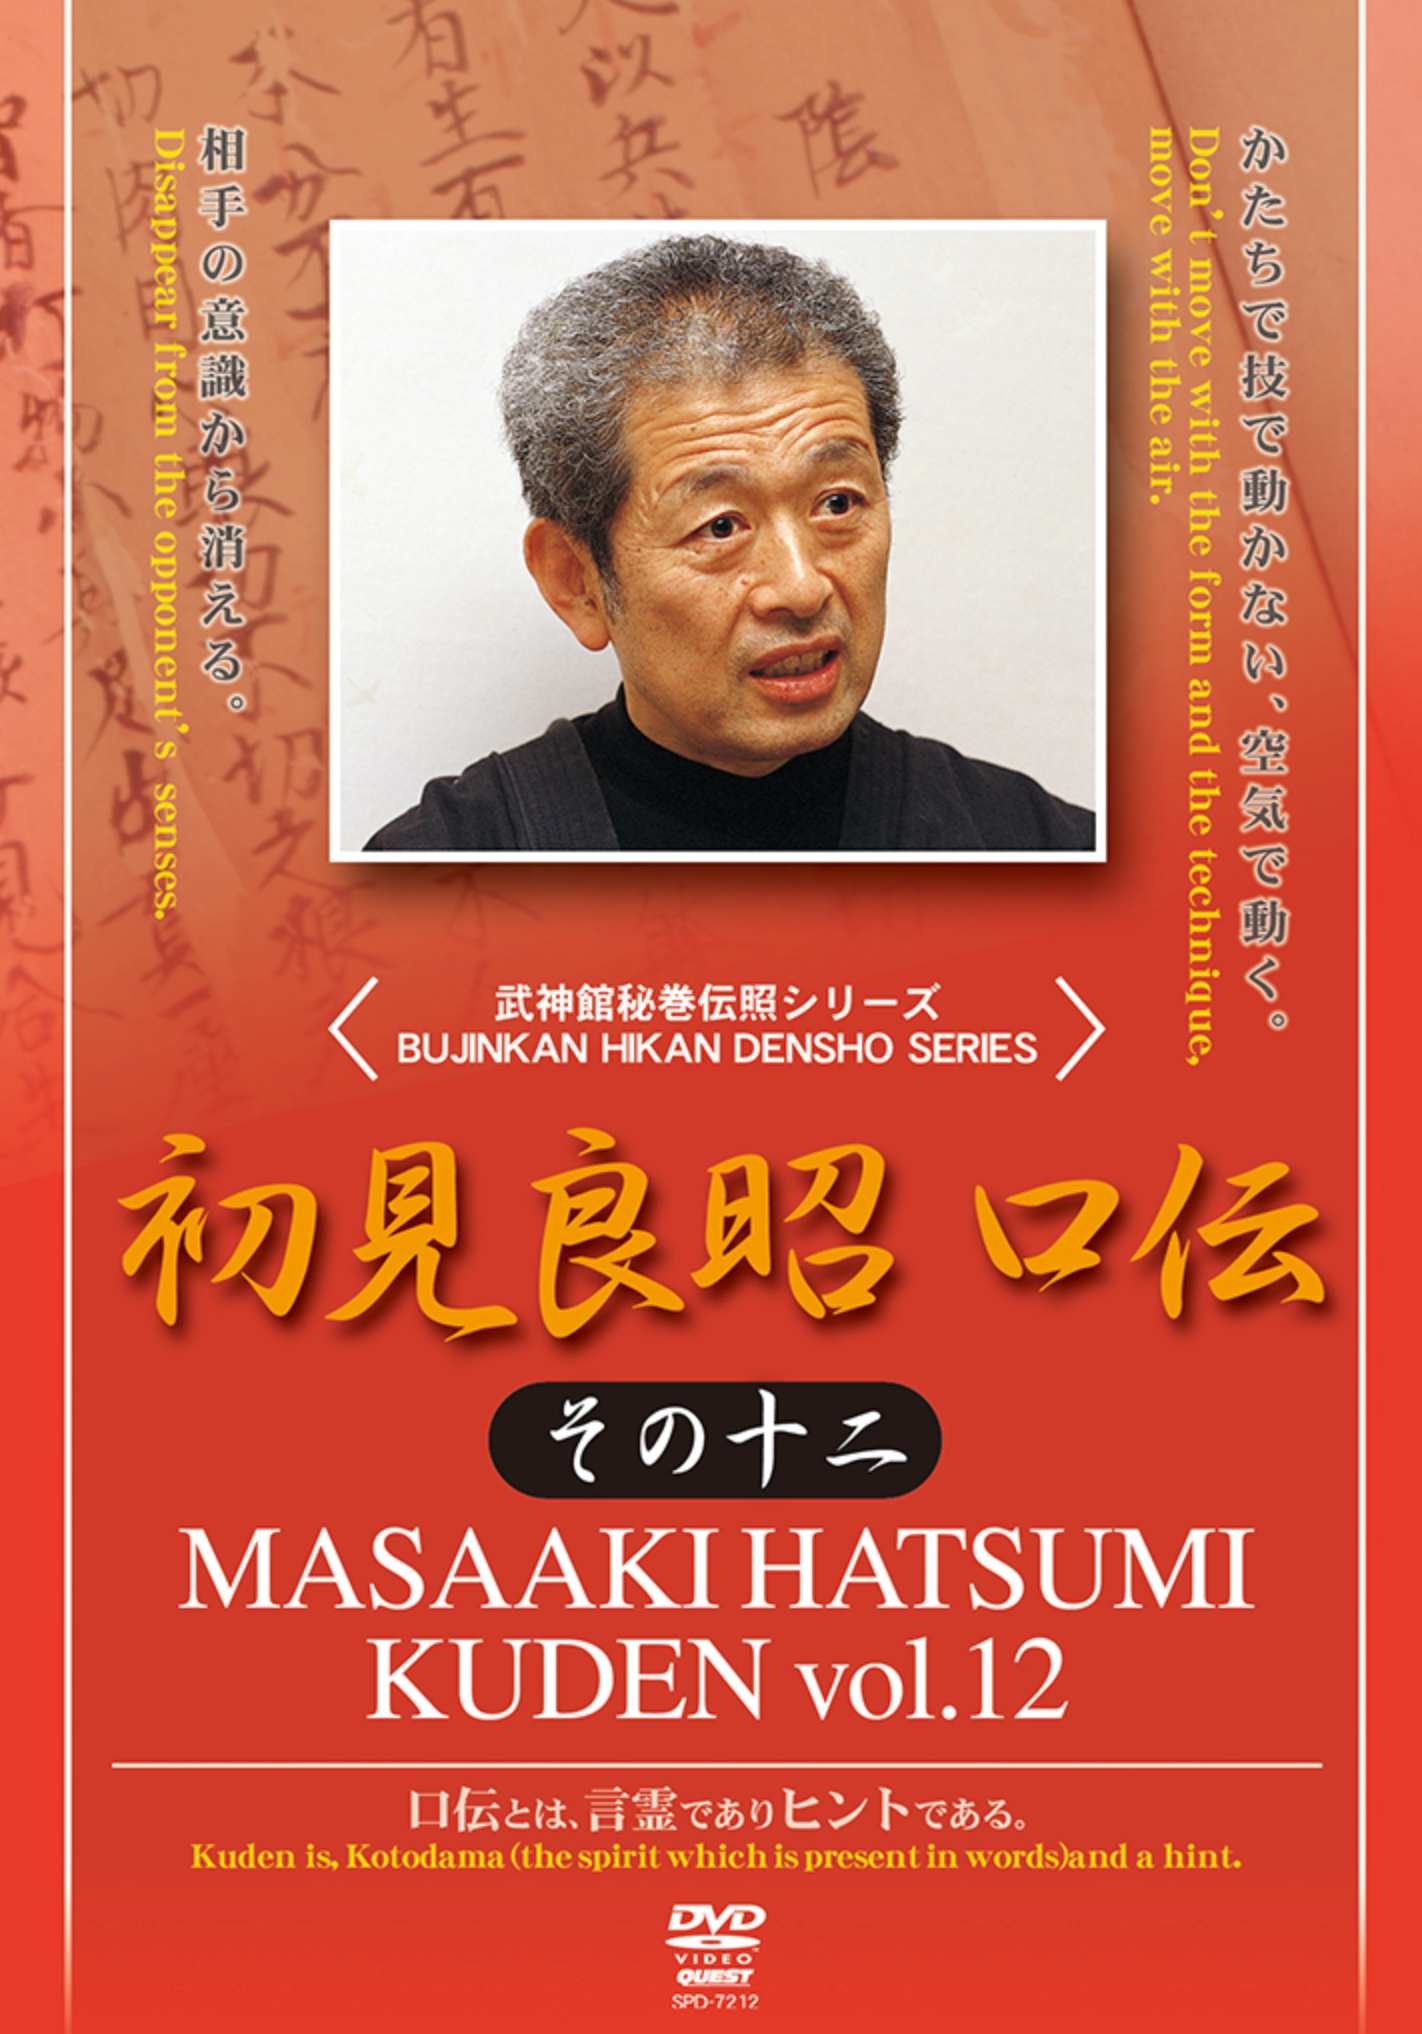 Kuden Vol 12 DVD with Masaaki Hatsumi - Budovideos Inc